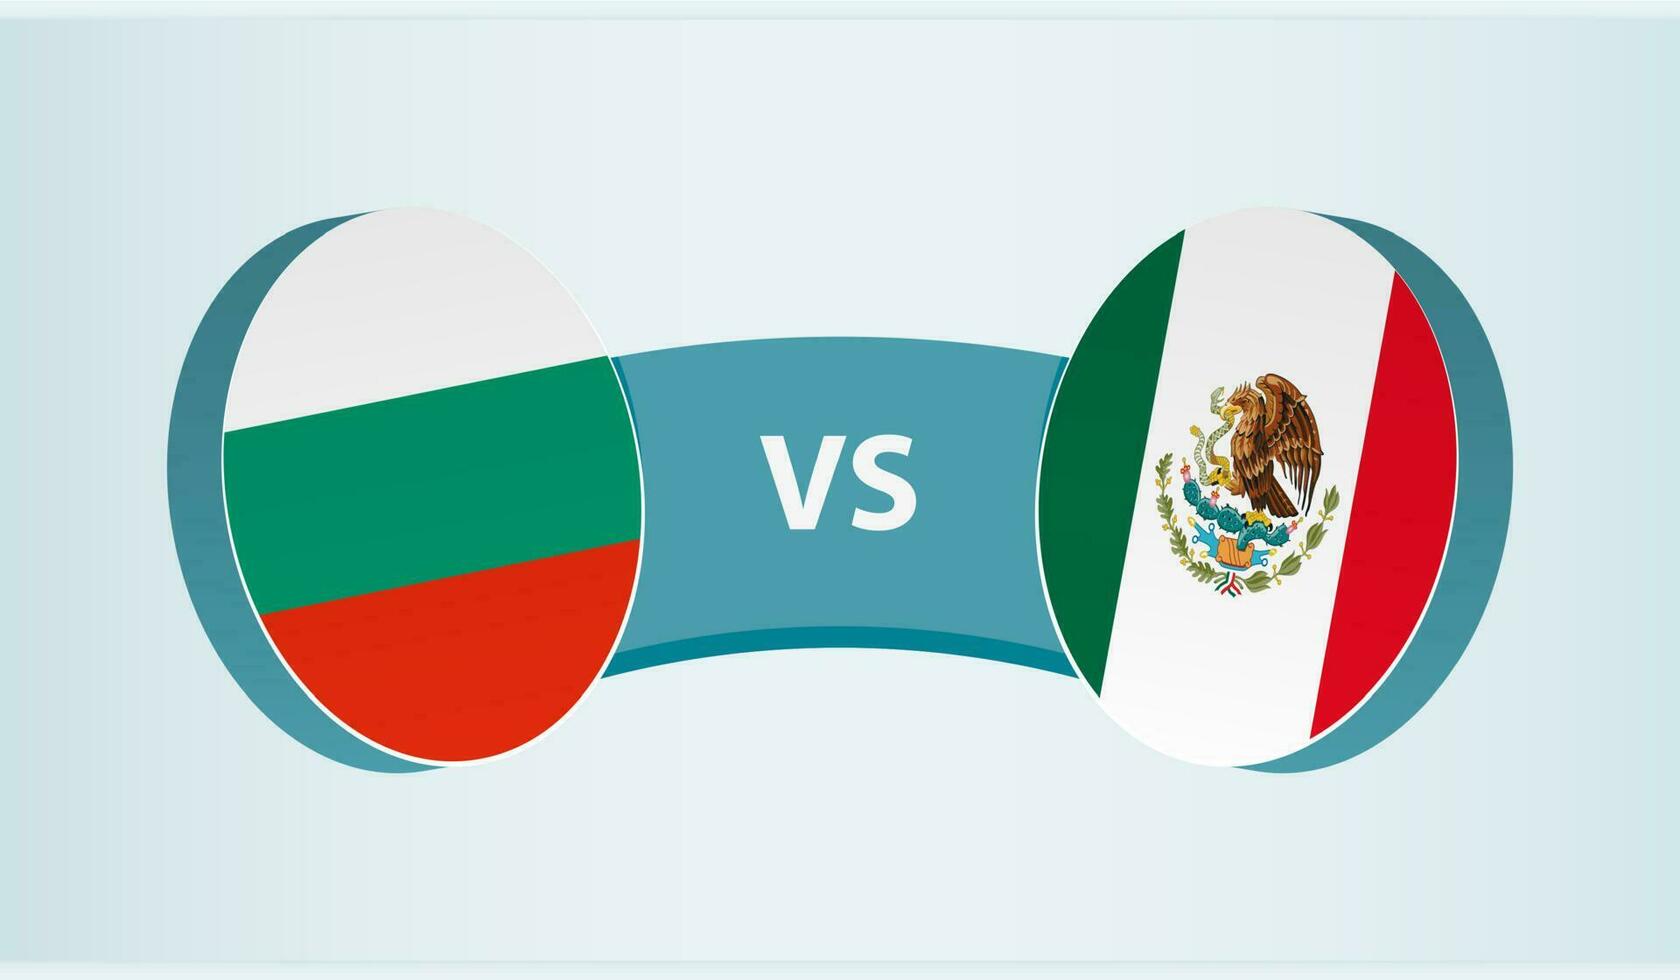 Bulgaria versus Mexico, team sports competition concept. vector